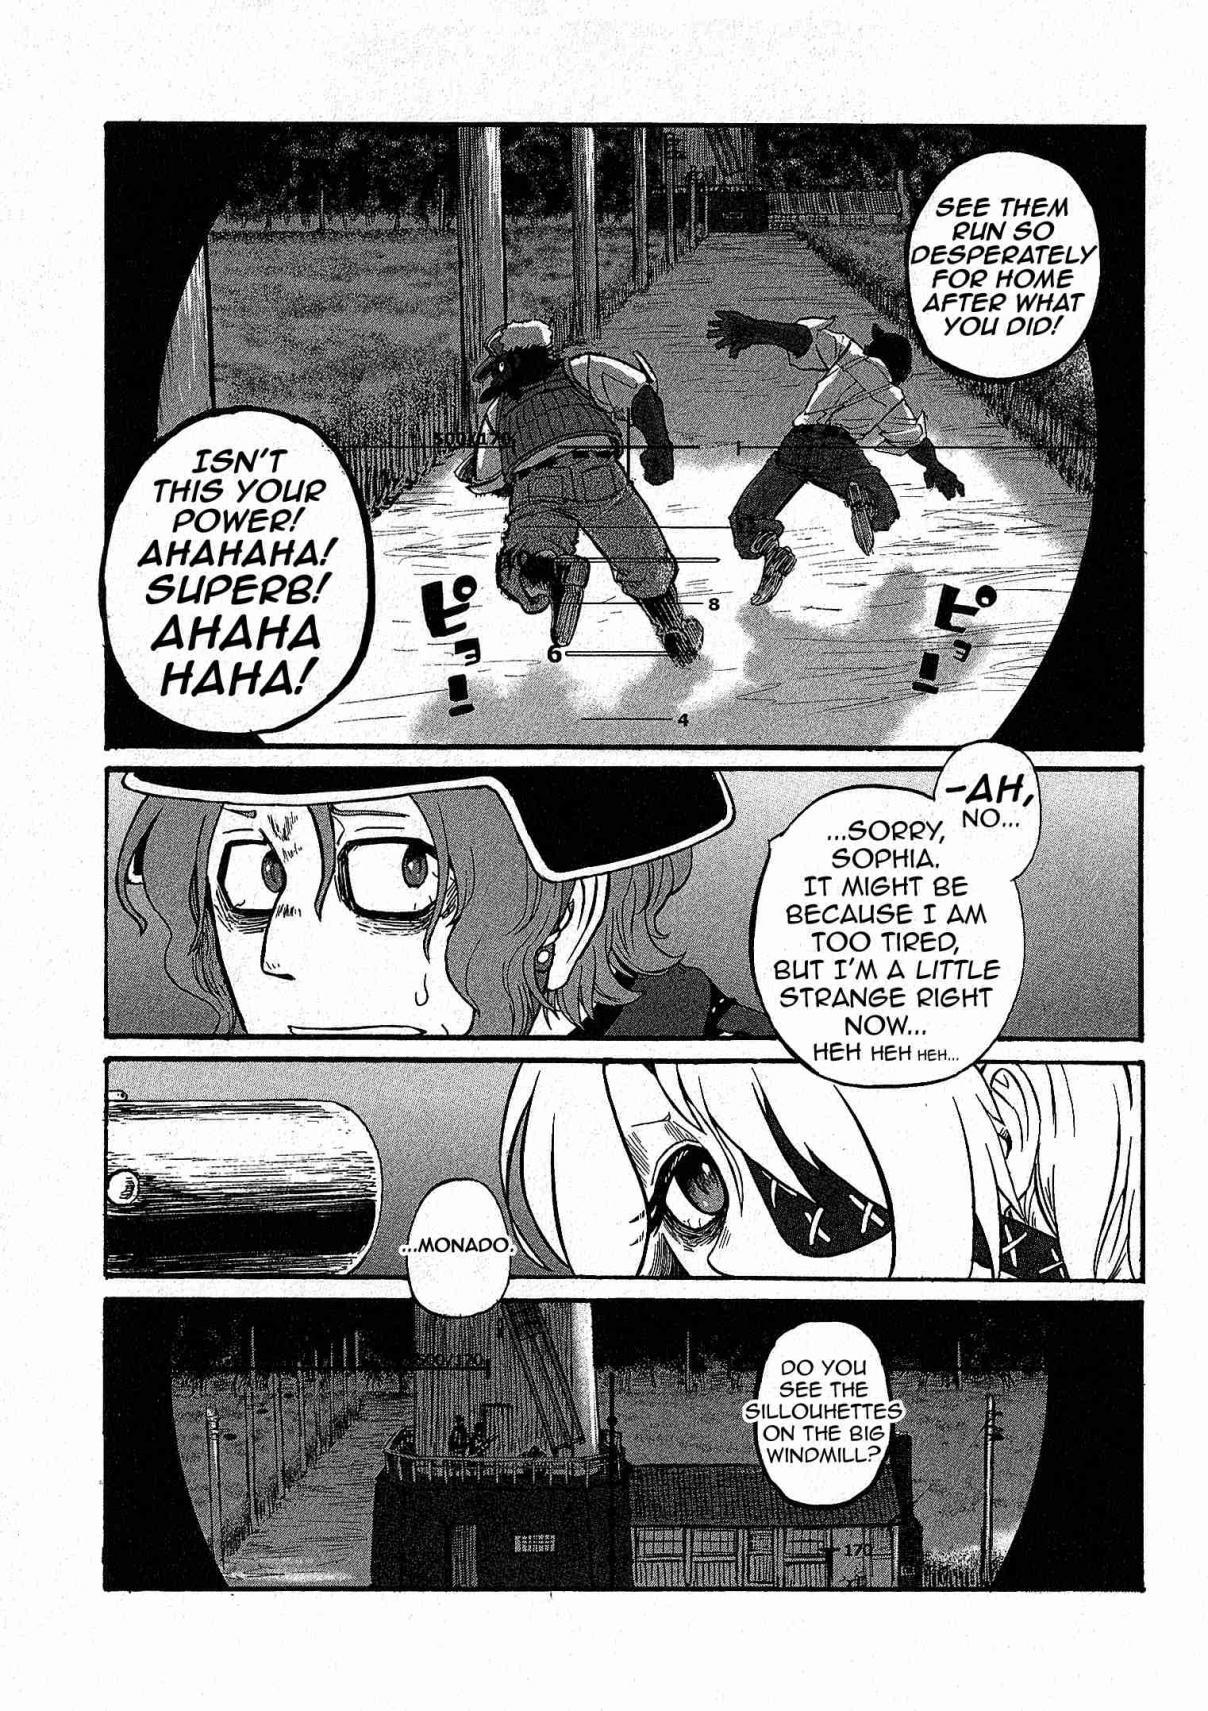 Groundless Sekigan no Sogekihei Vol. 3 Ch. 12.1 The eye of the grim reaper (Part 2)